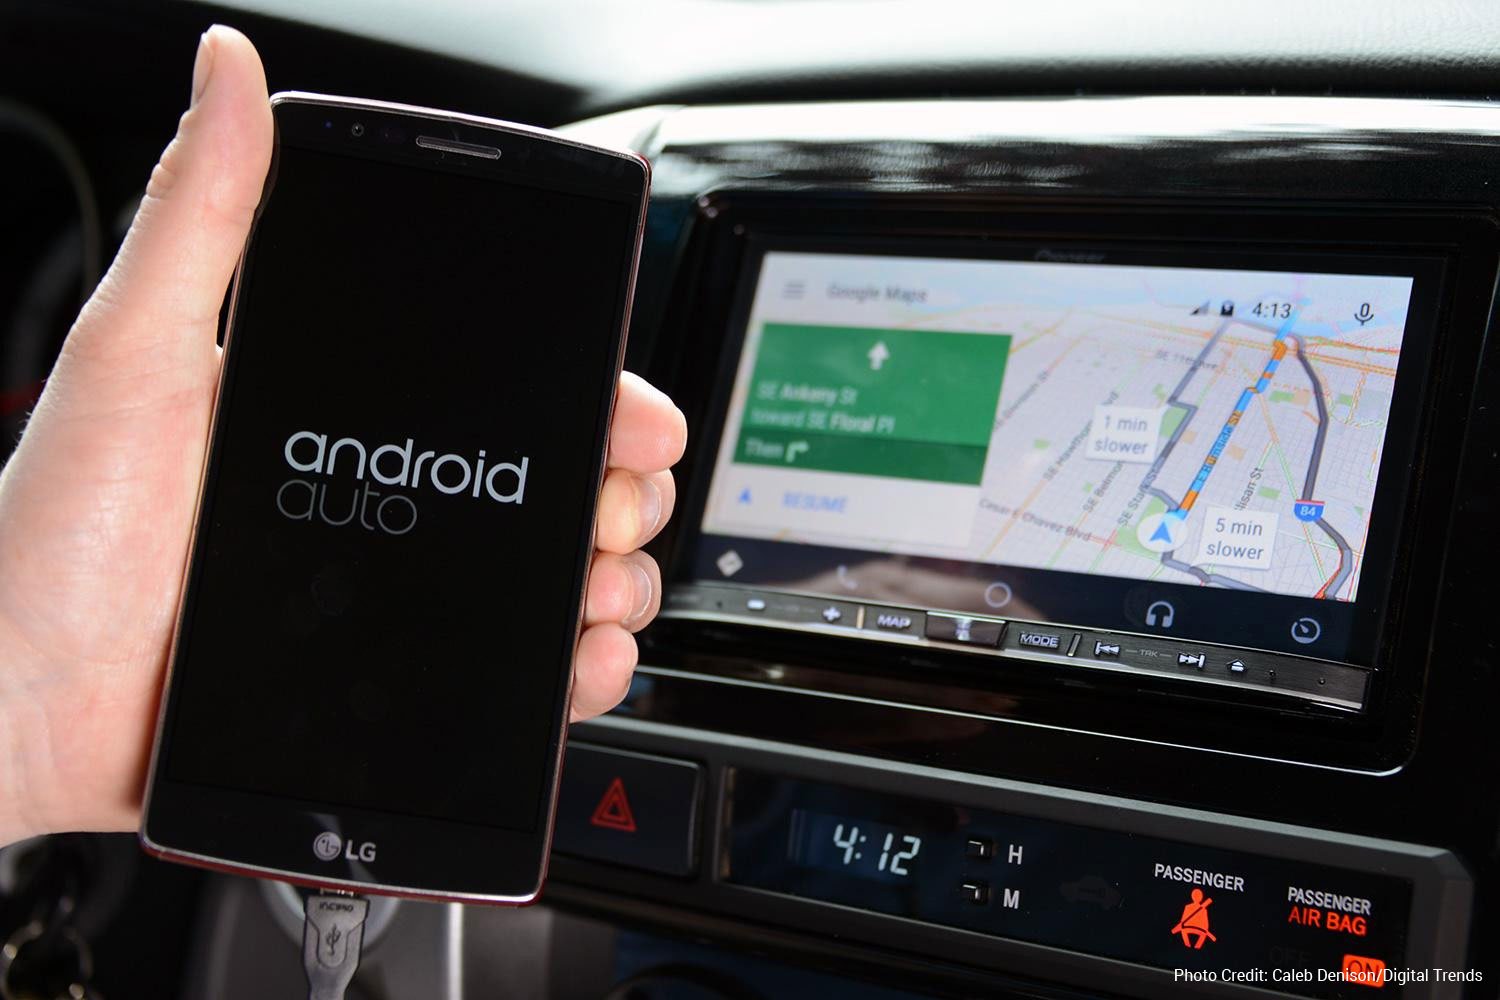 Андроид авто список авто. Android auto. Андроид для автомобиля. Андроидсвто. Android auto приложение.